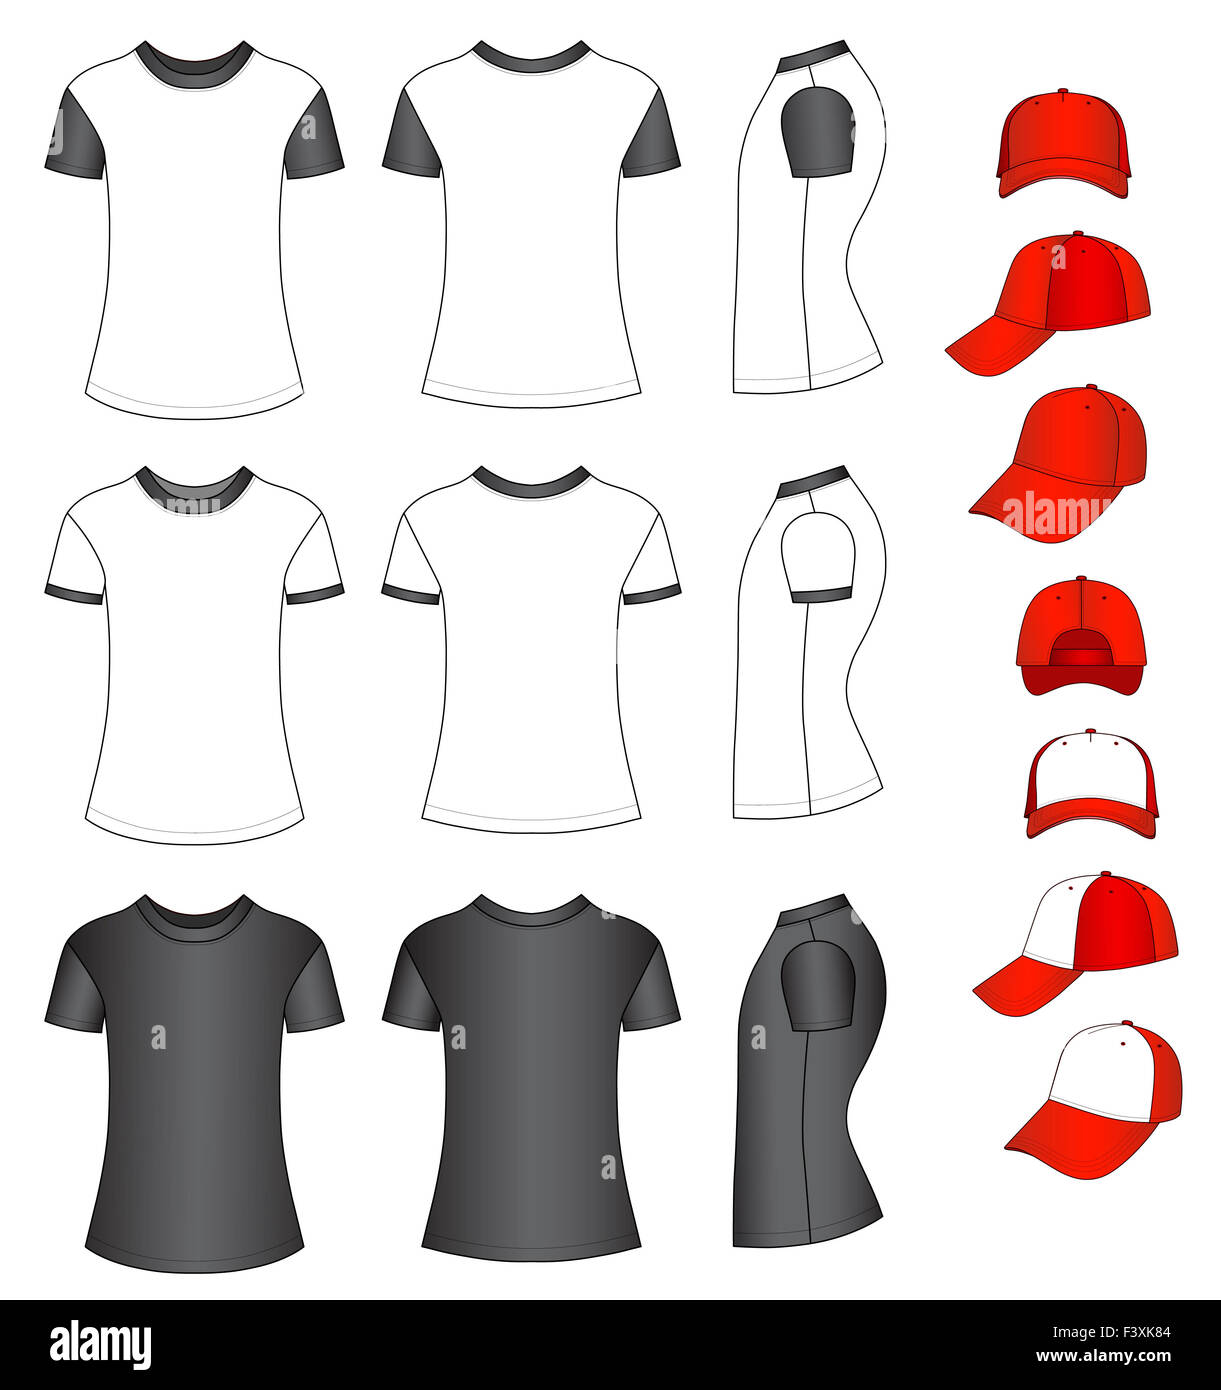 Cap et shirts illustration avant recommandés Banque D'Images